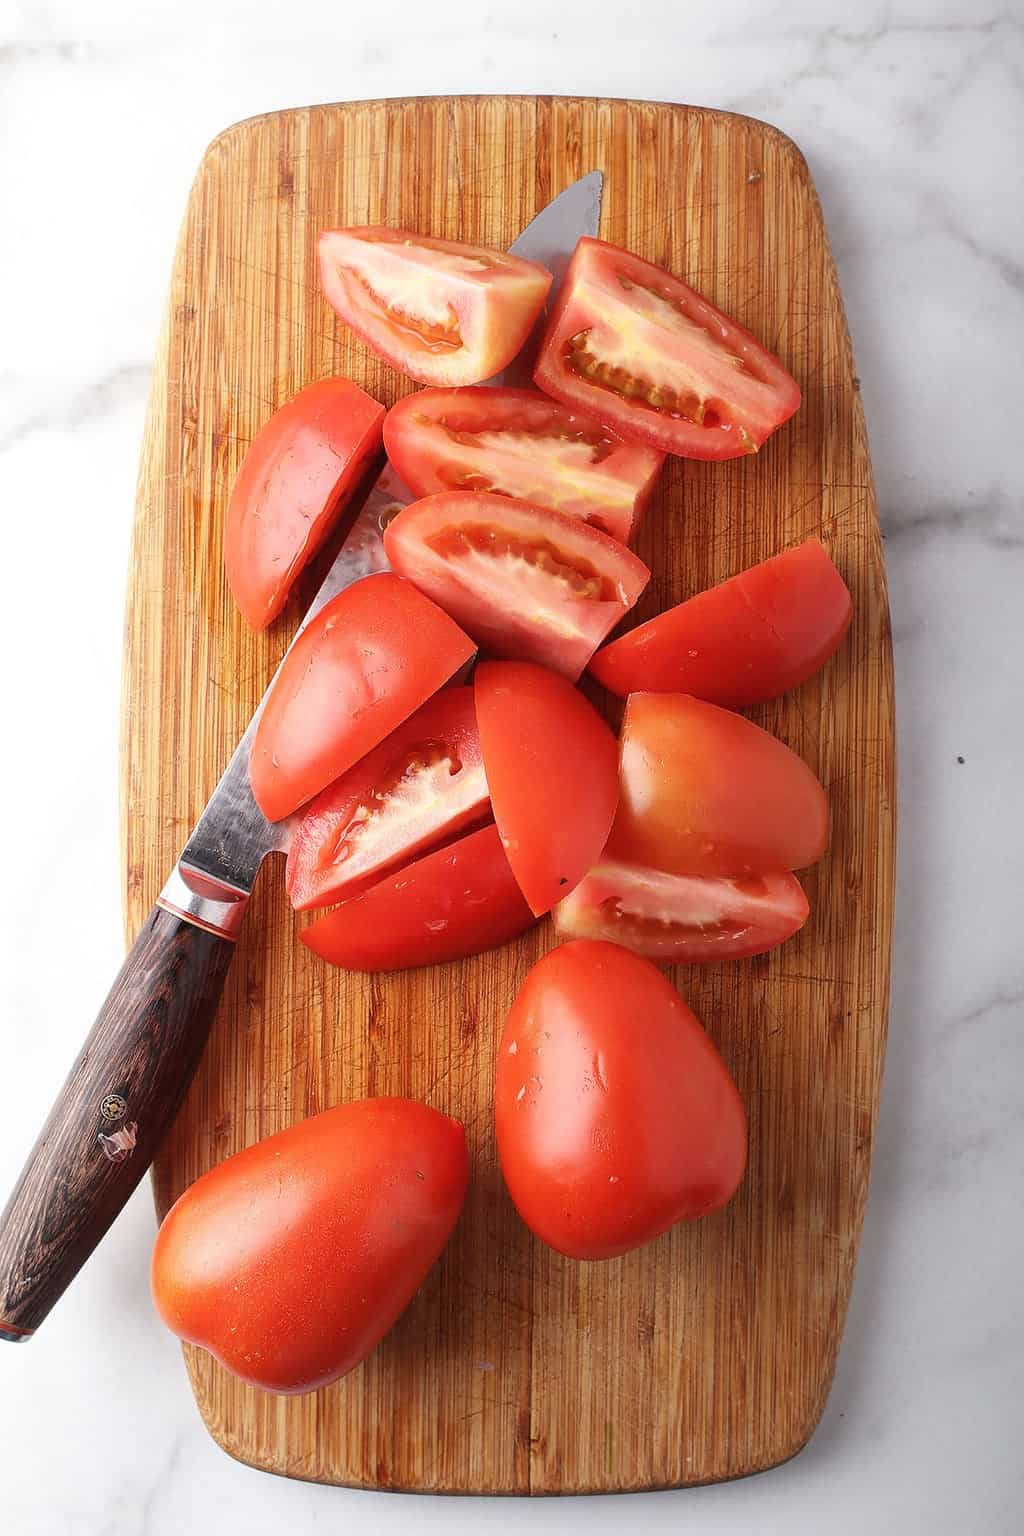 Roma tomatoes cut into quarters